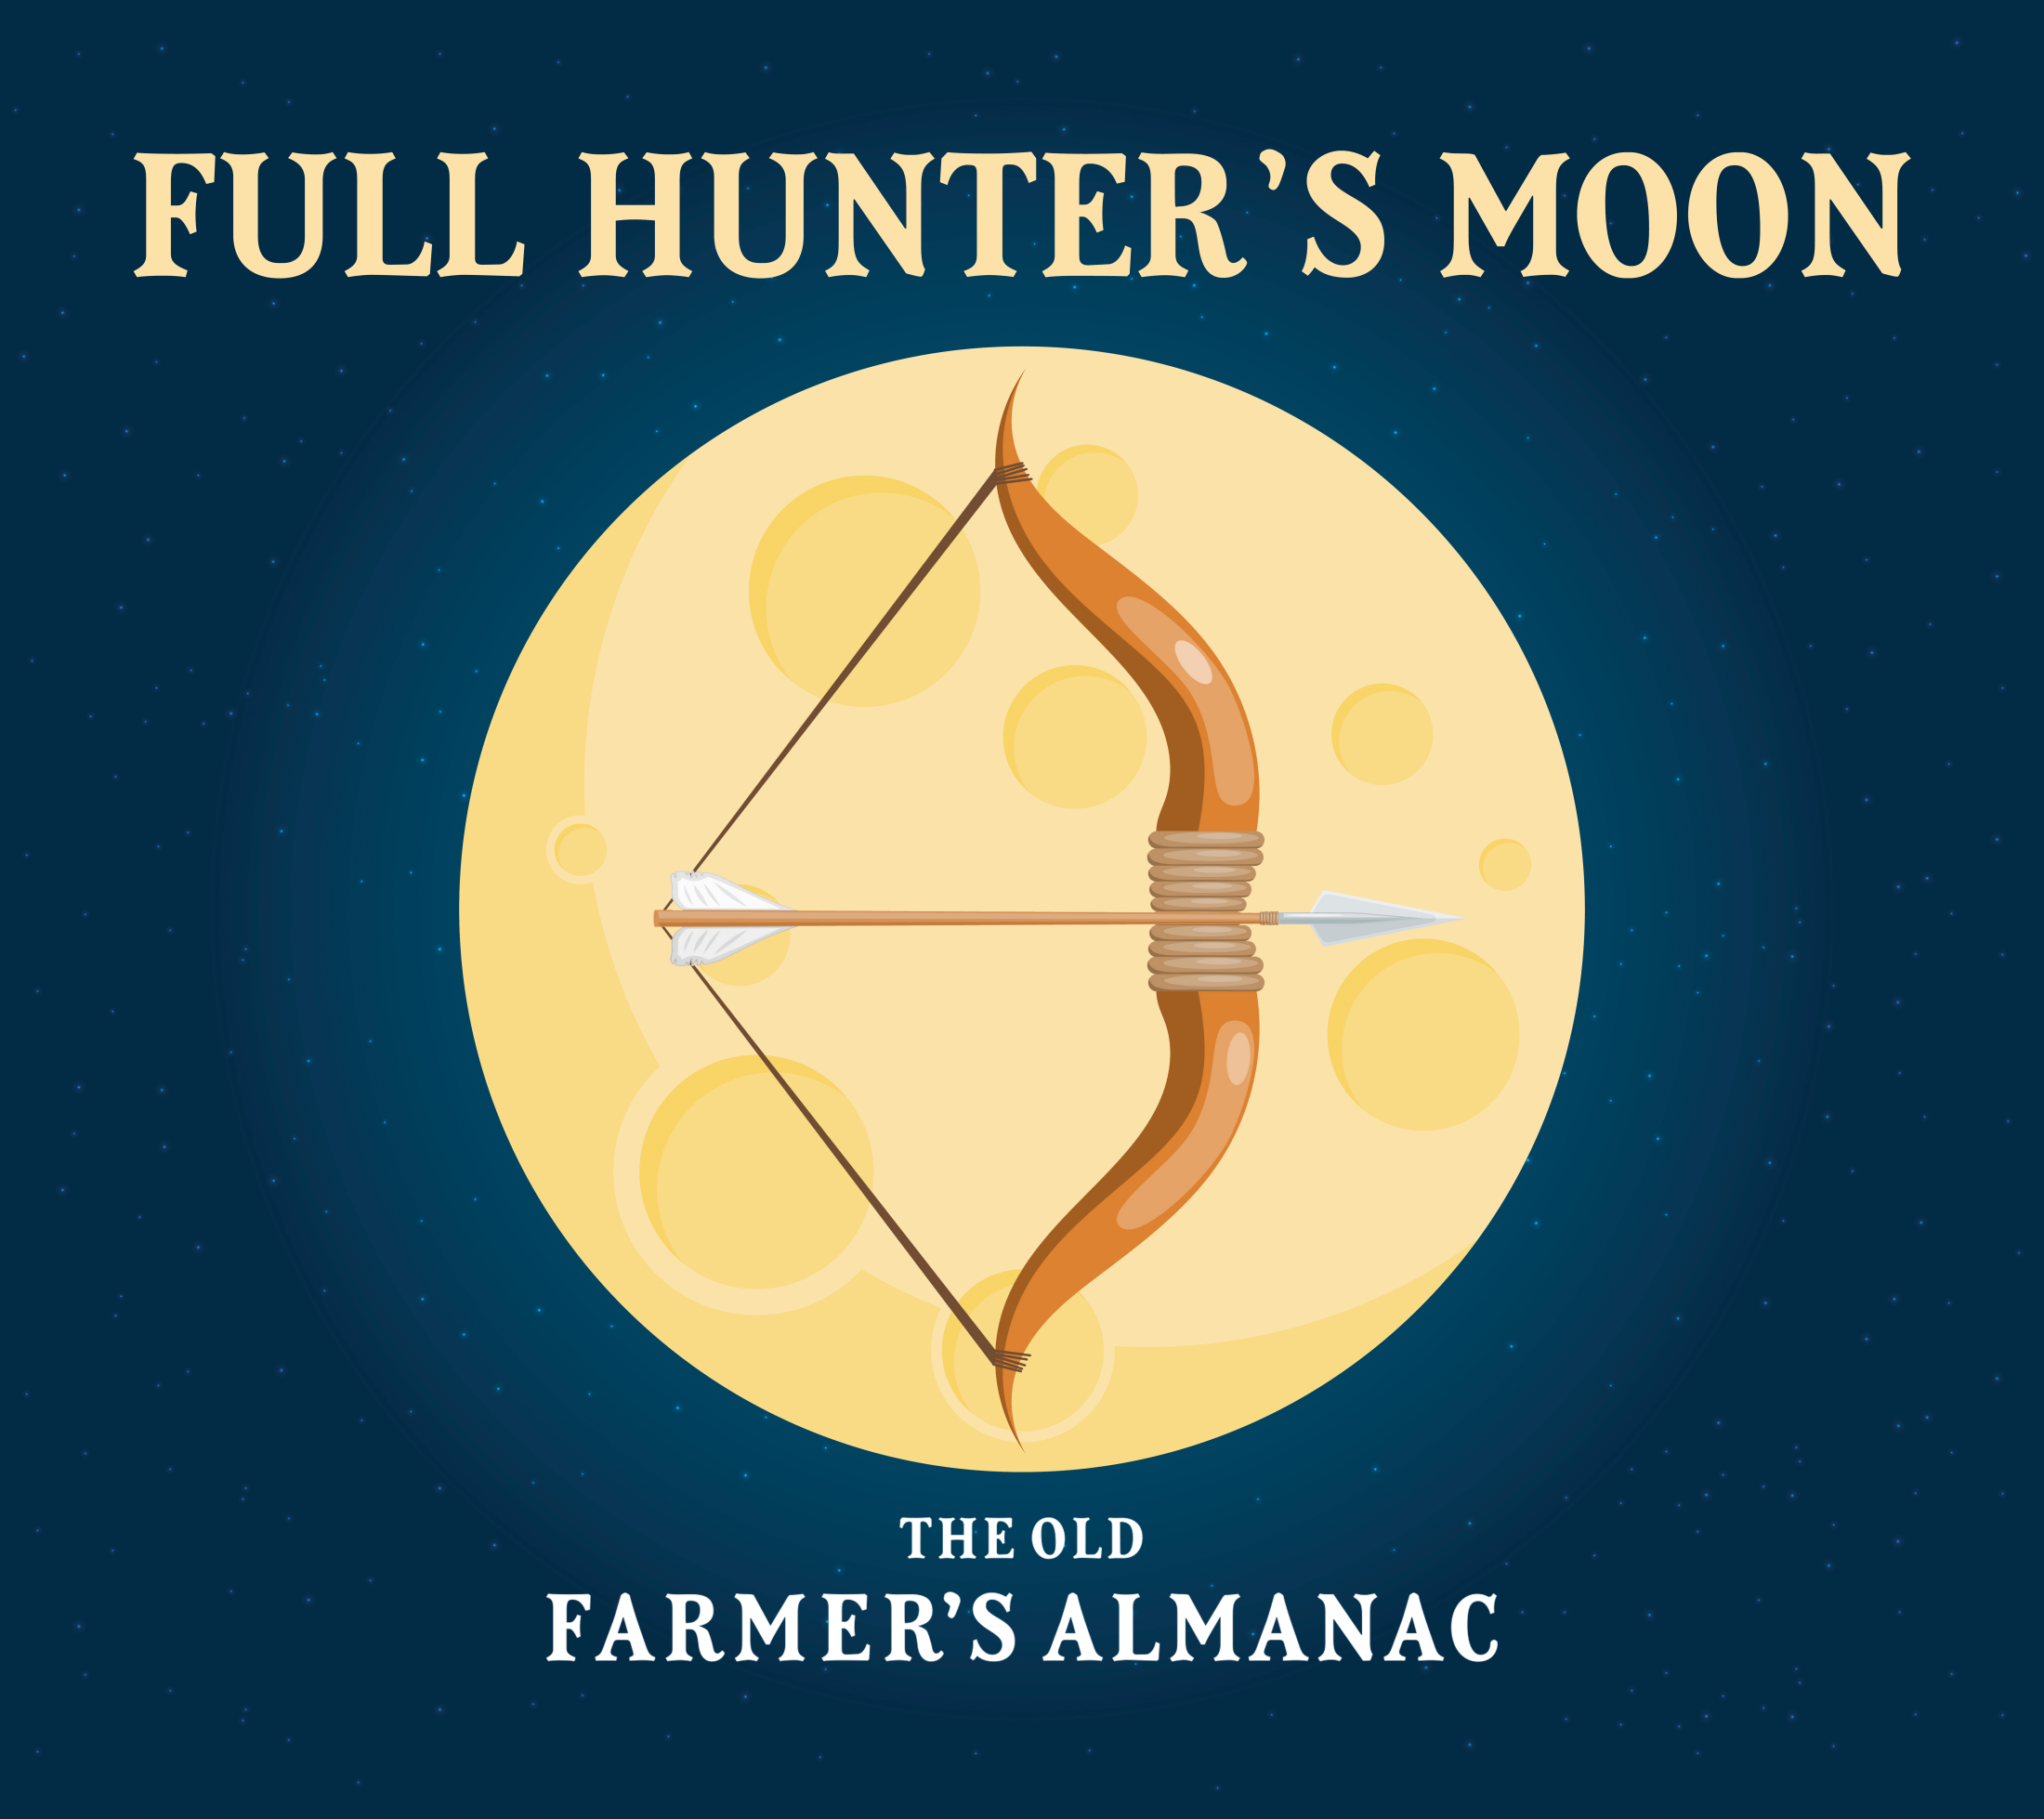 Full Moon In October Hunter S Blue Moon On Halloween The Old Farmer S Almanac